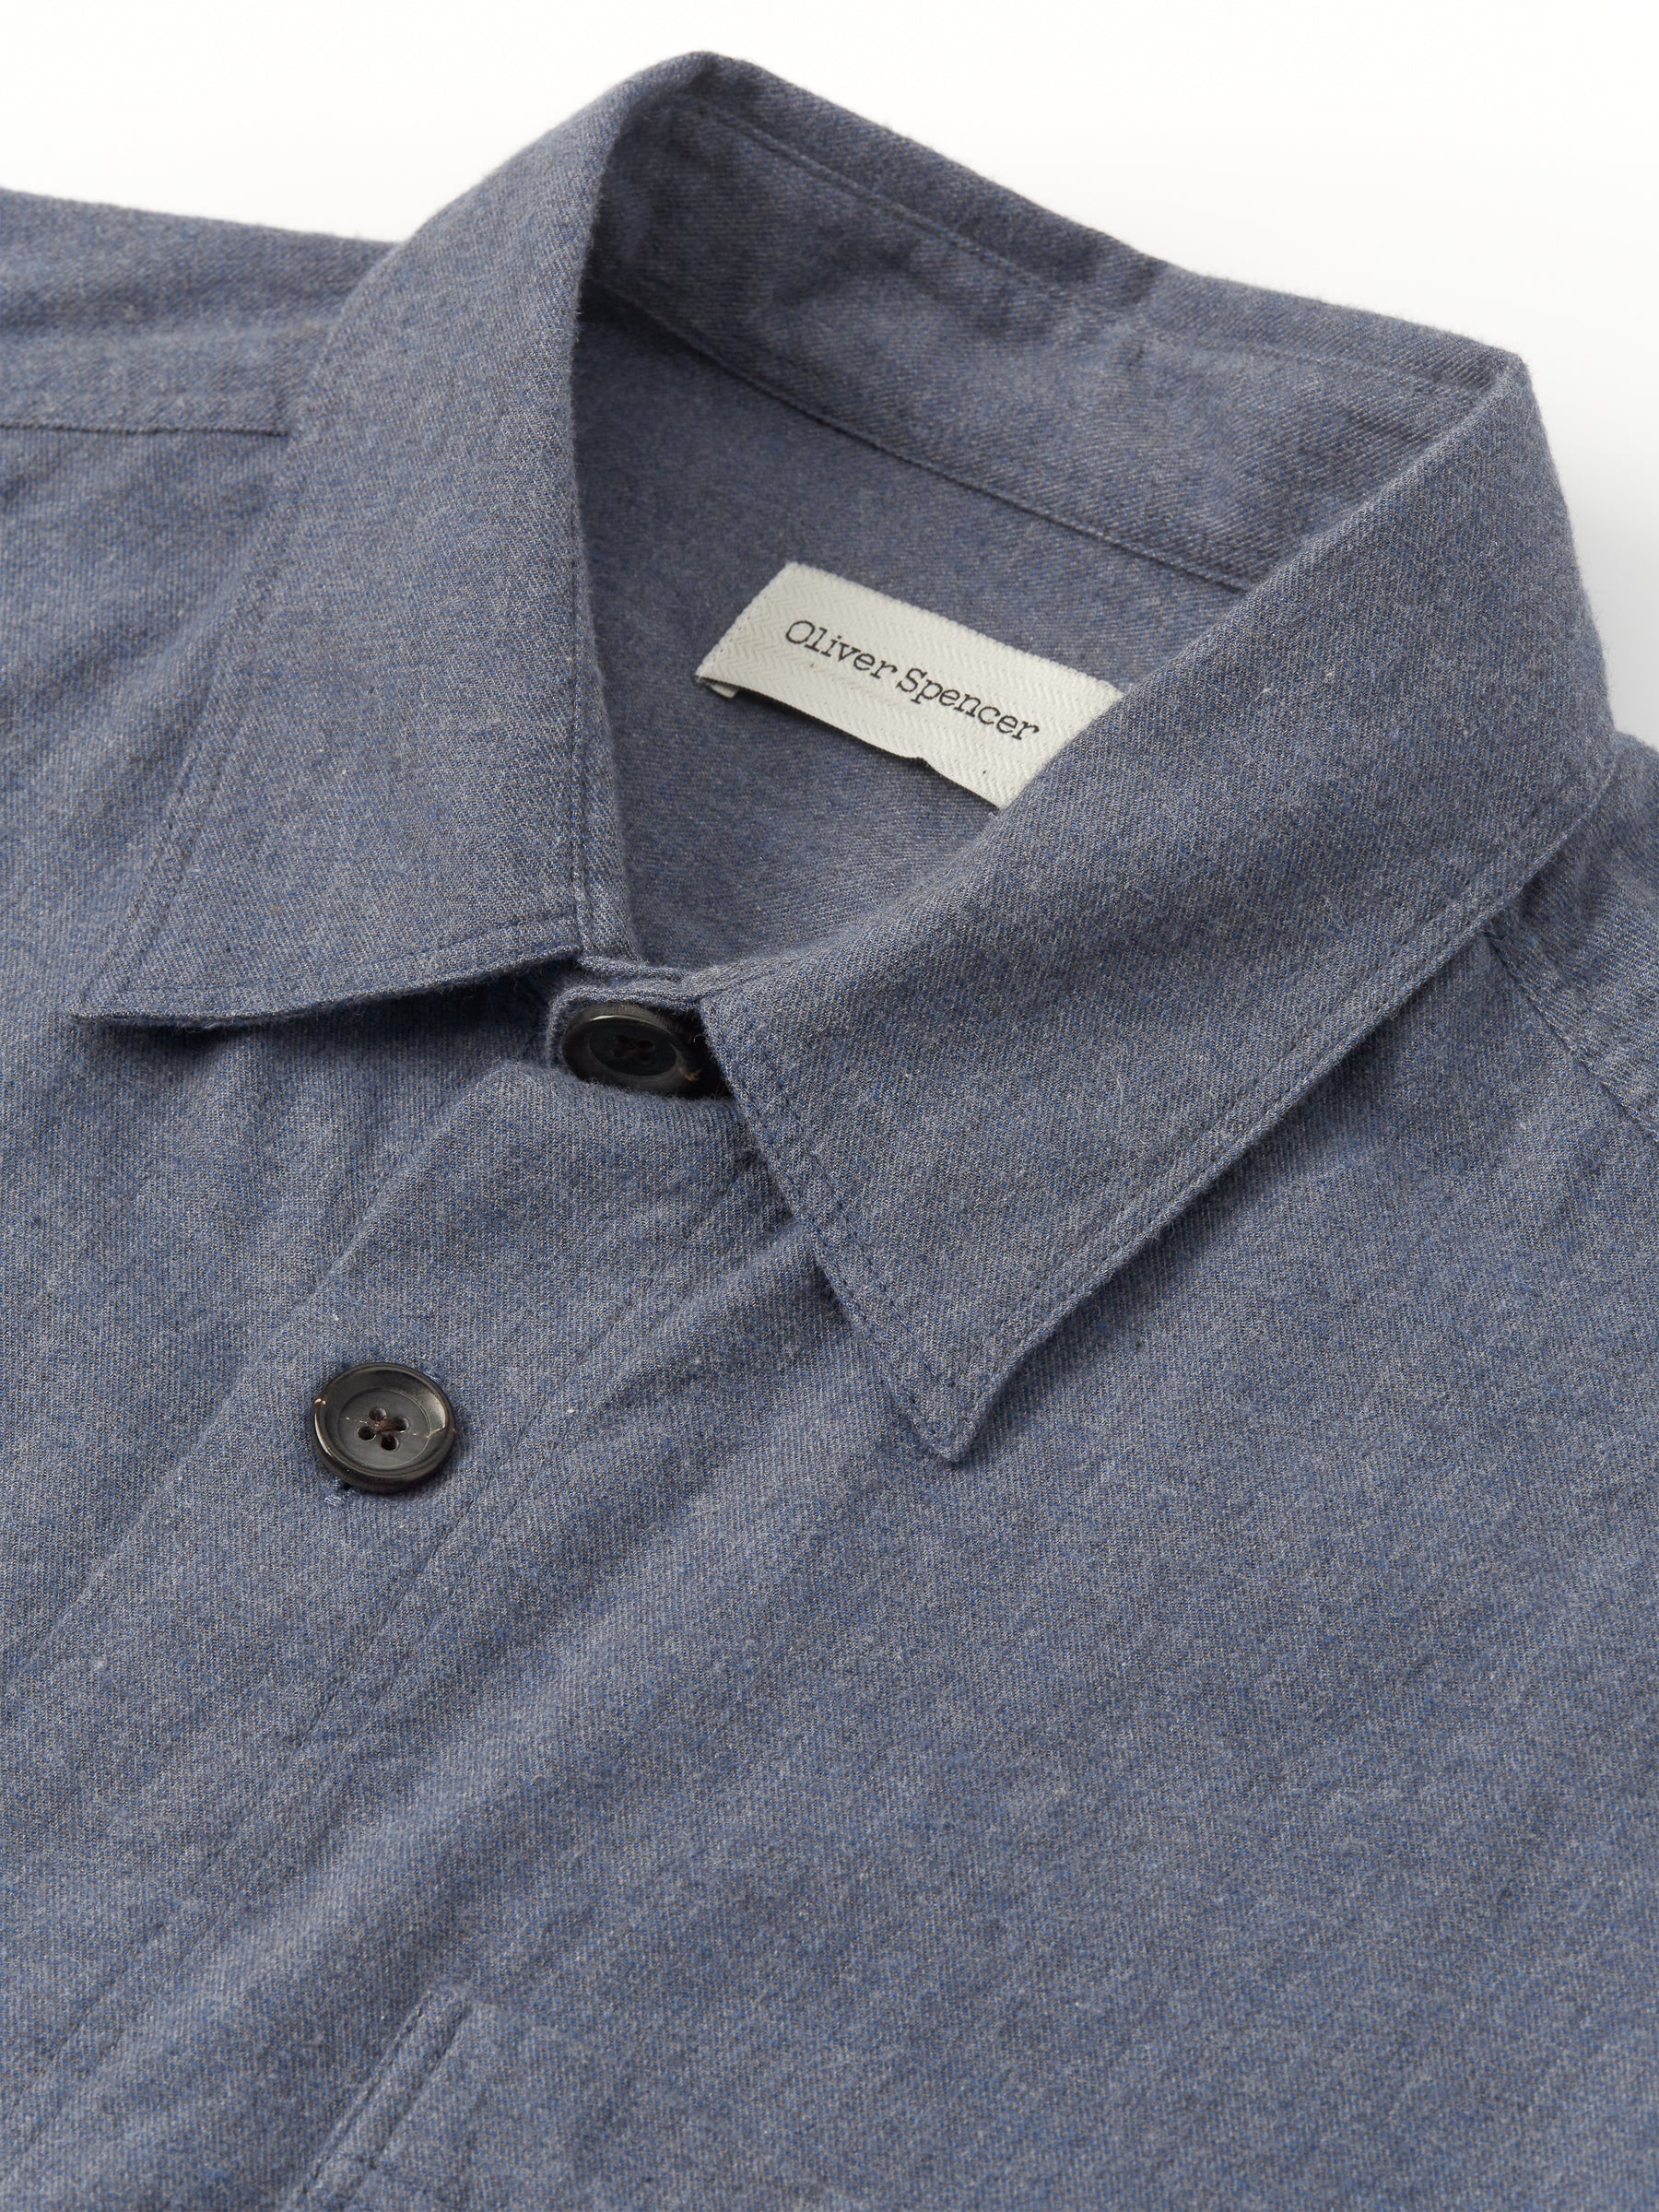 Treviscoe Shirt Abbingdon Slate Blue